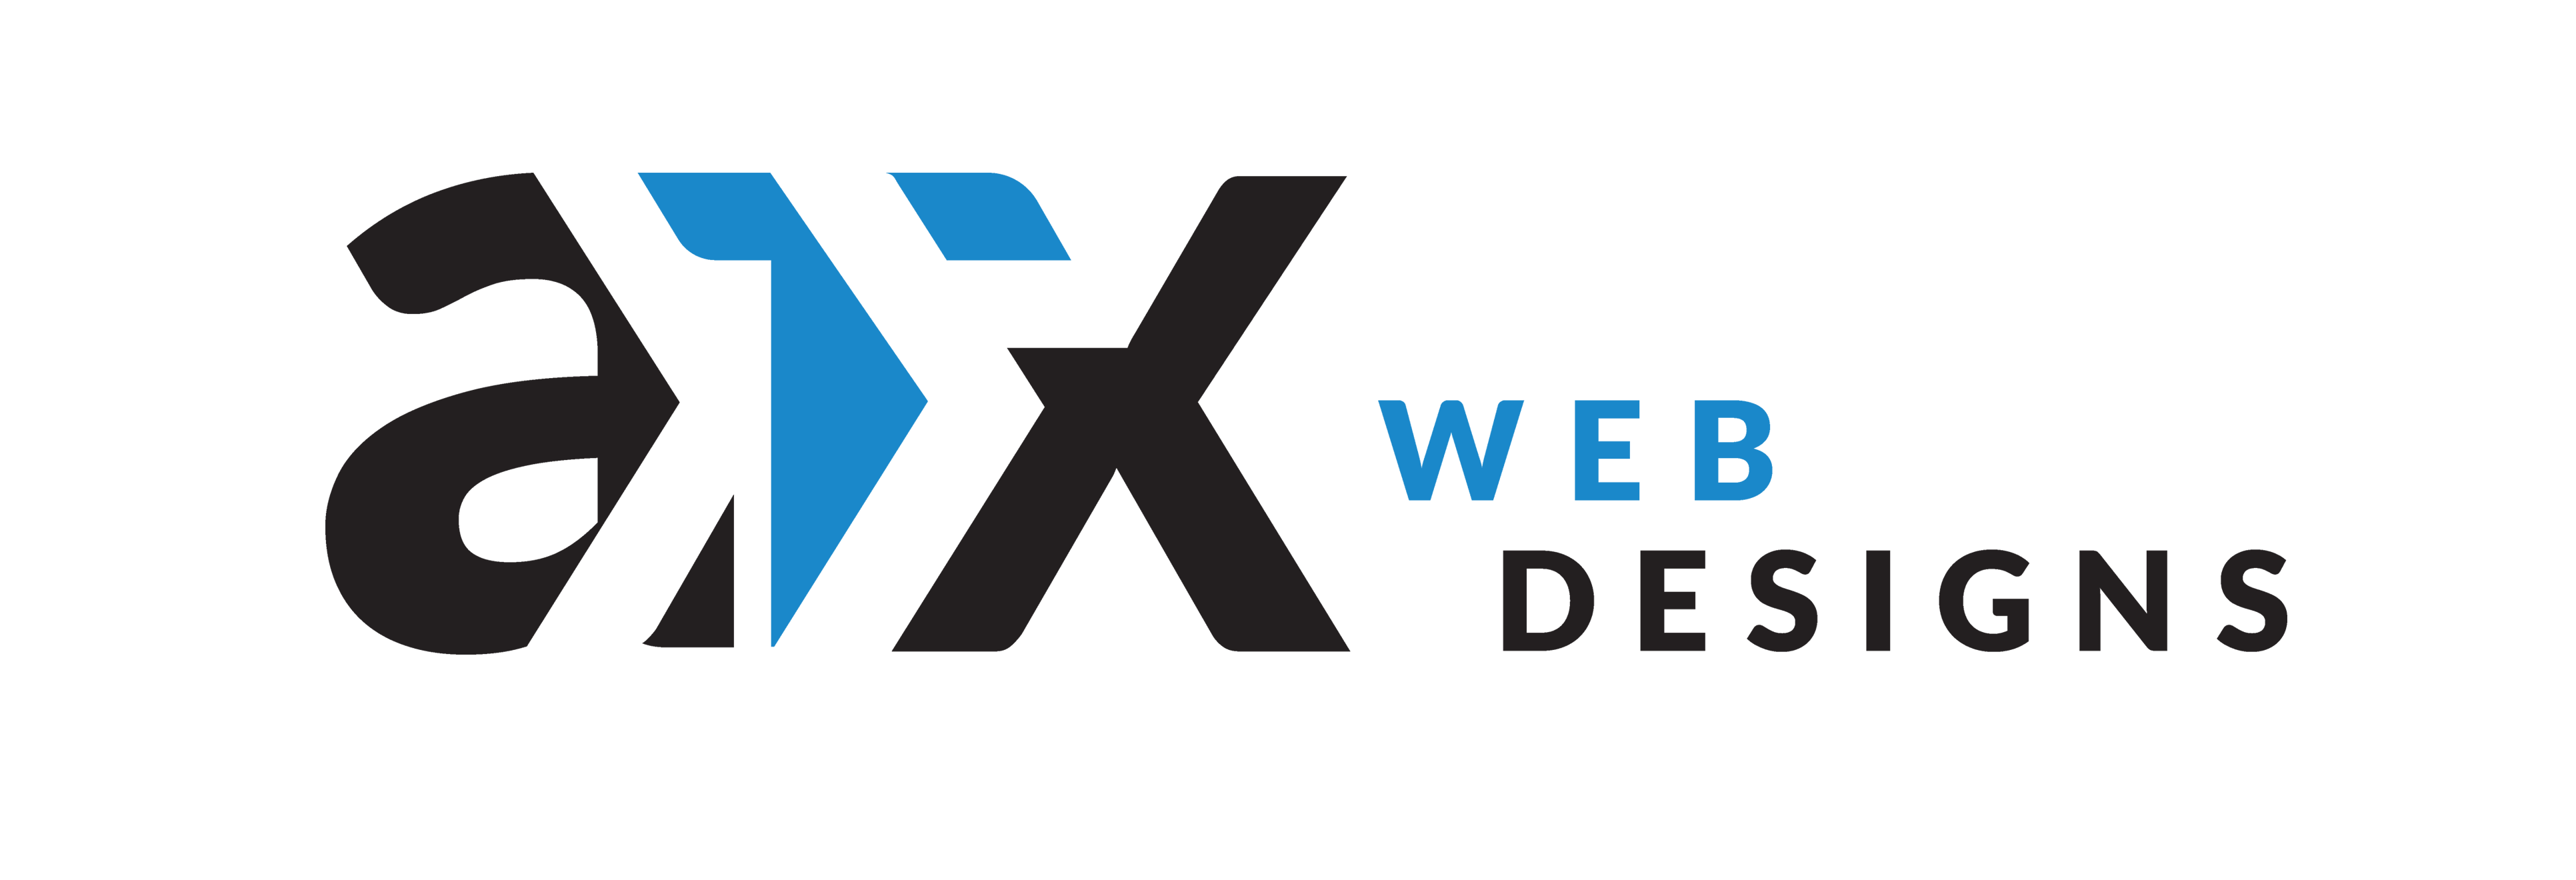 Best Web Design Business Logo: ATX Web Designs